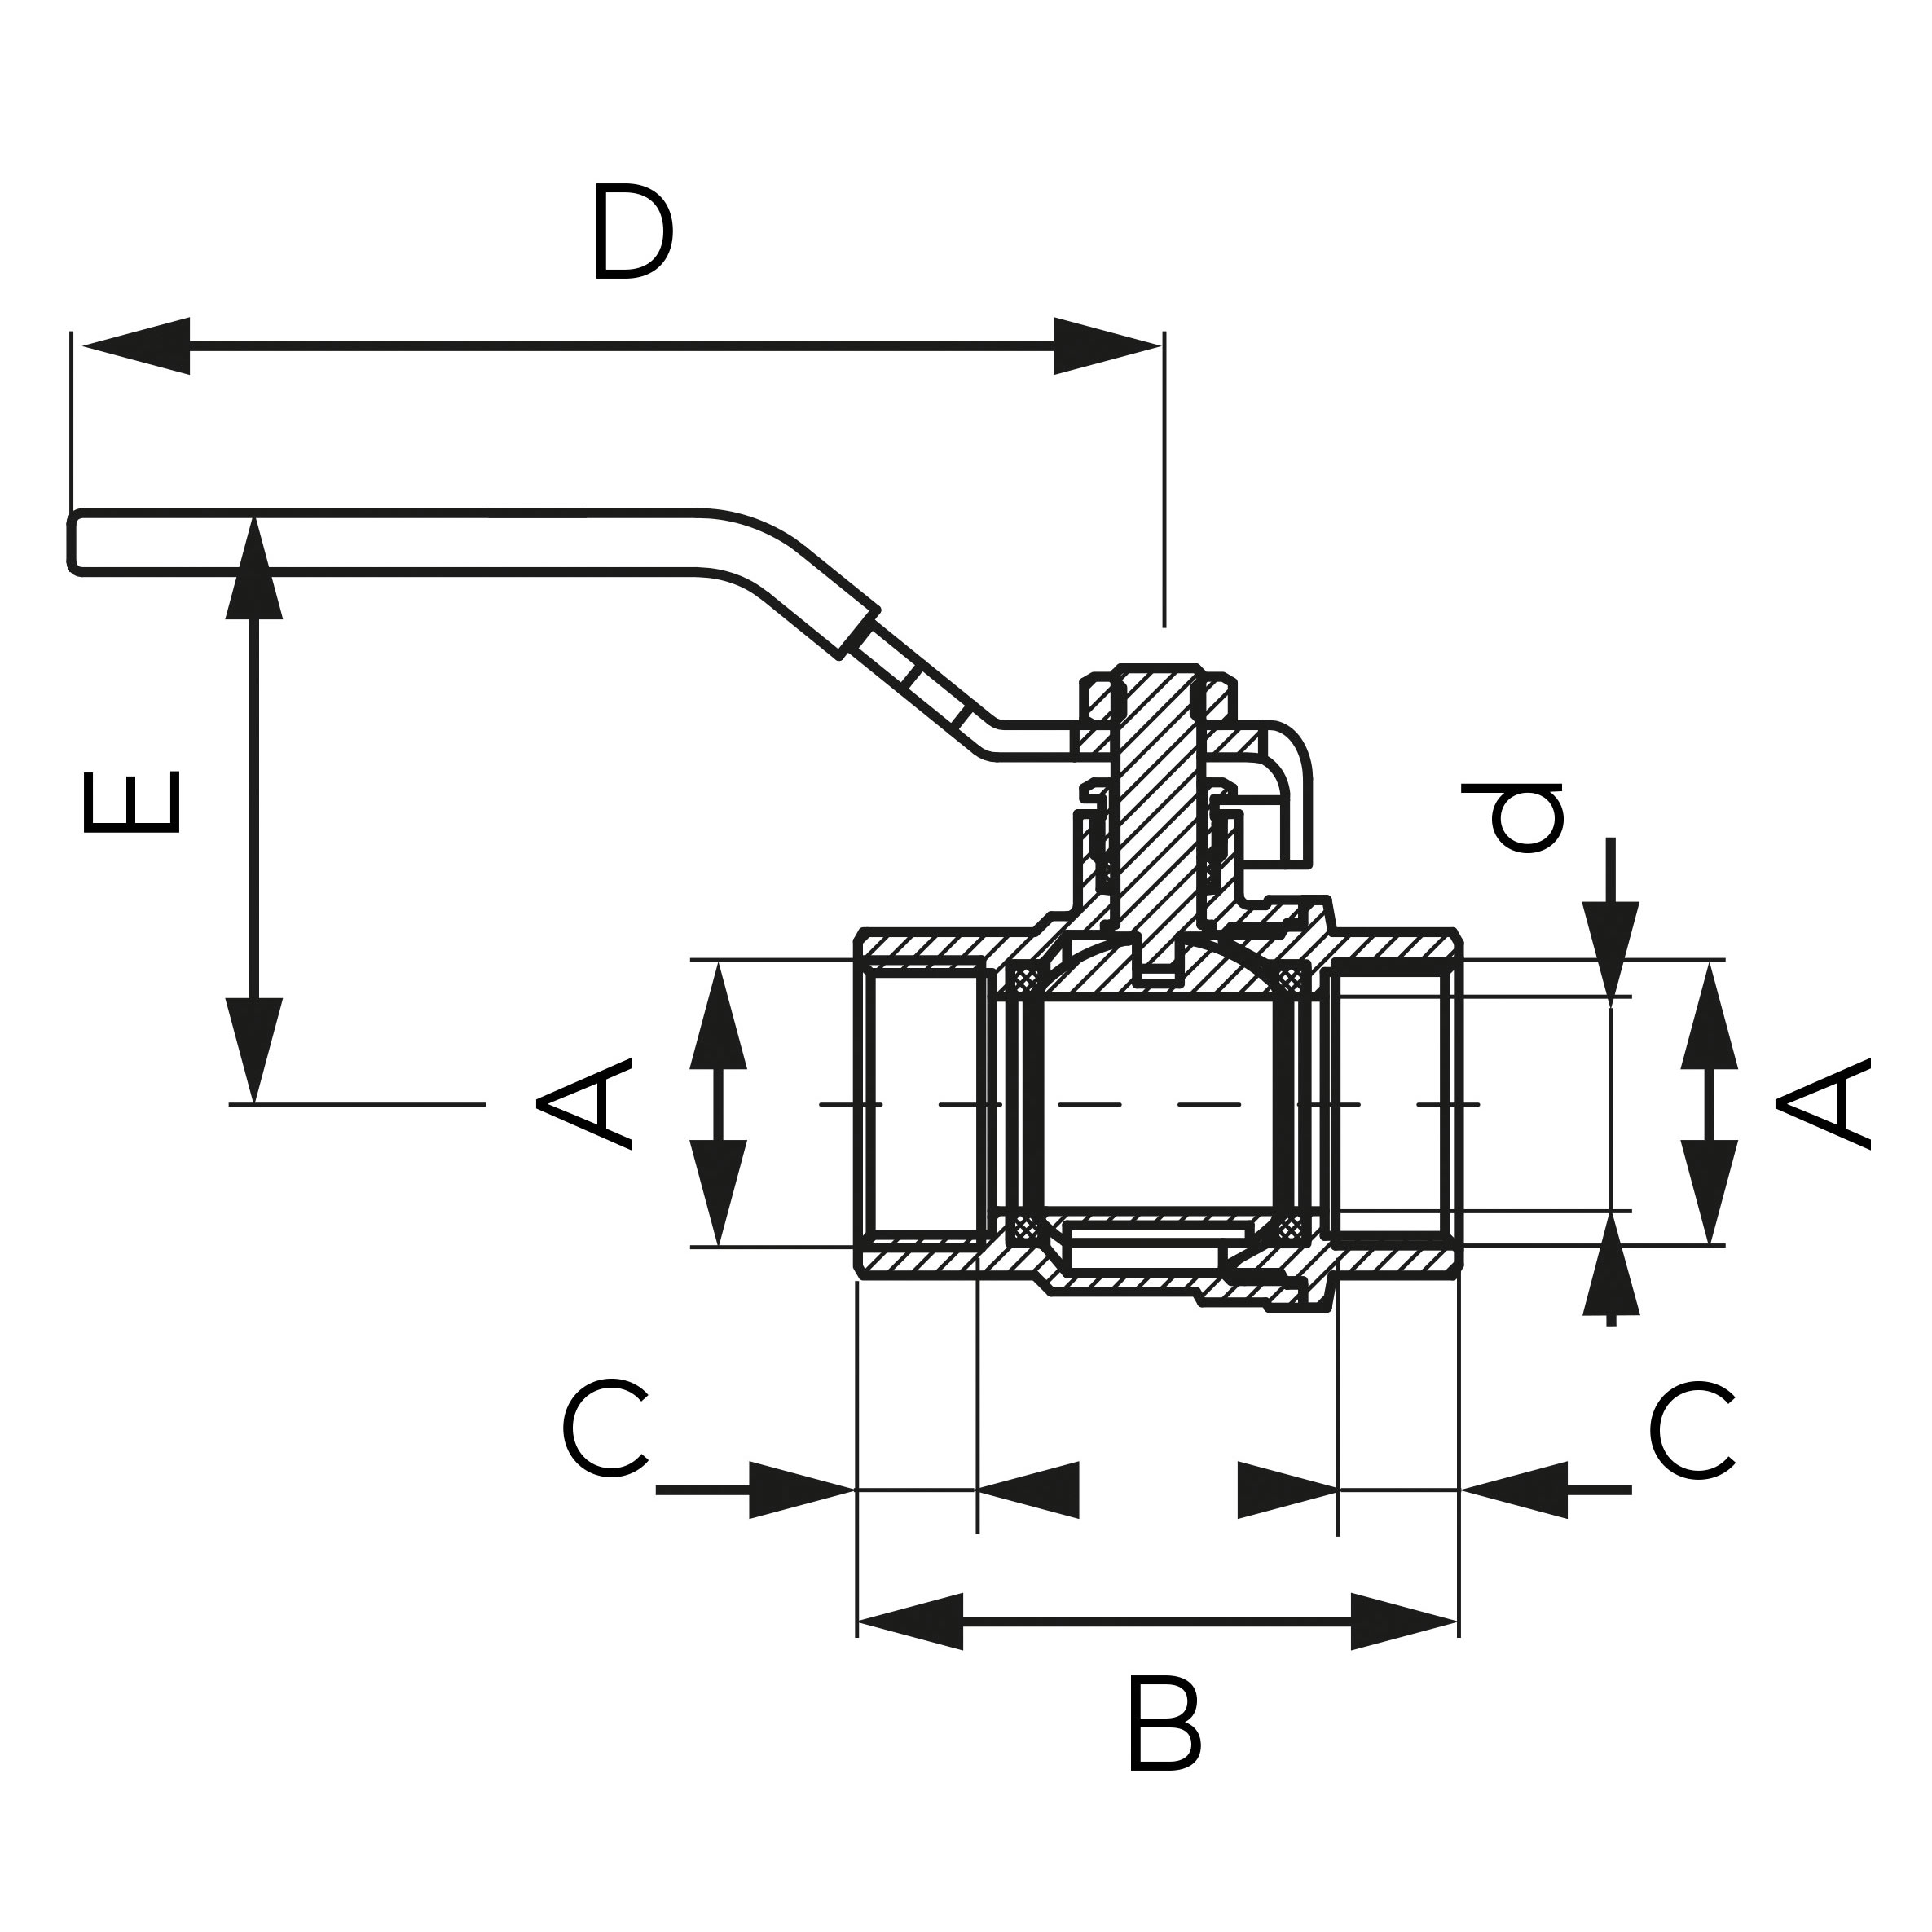 FPower ball valve